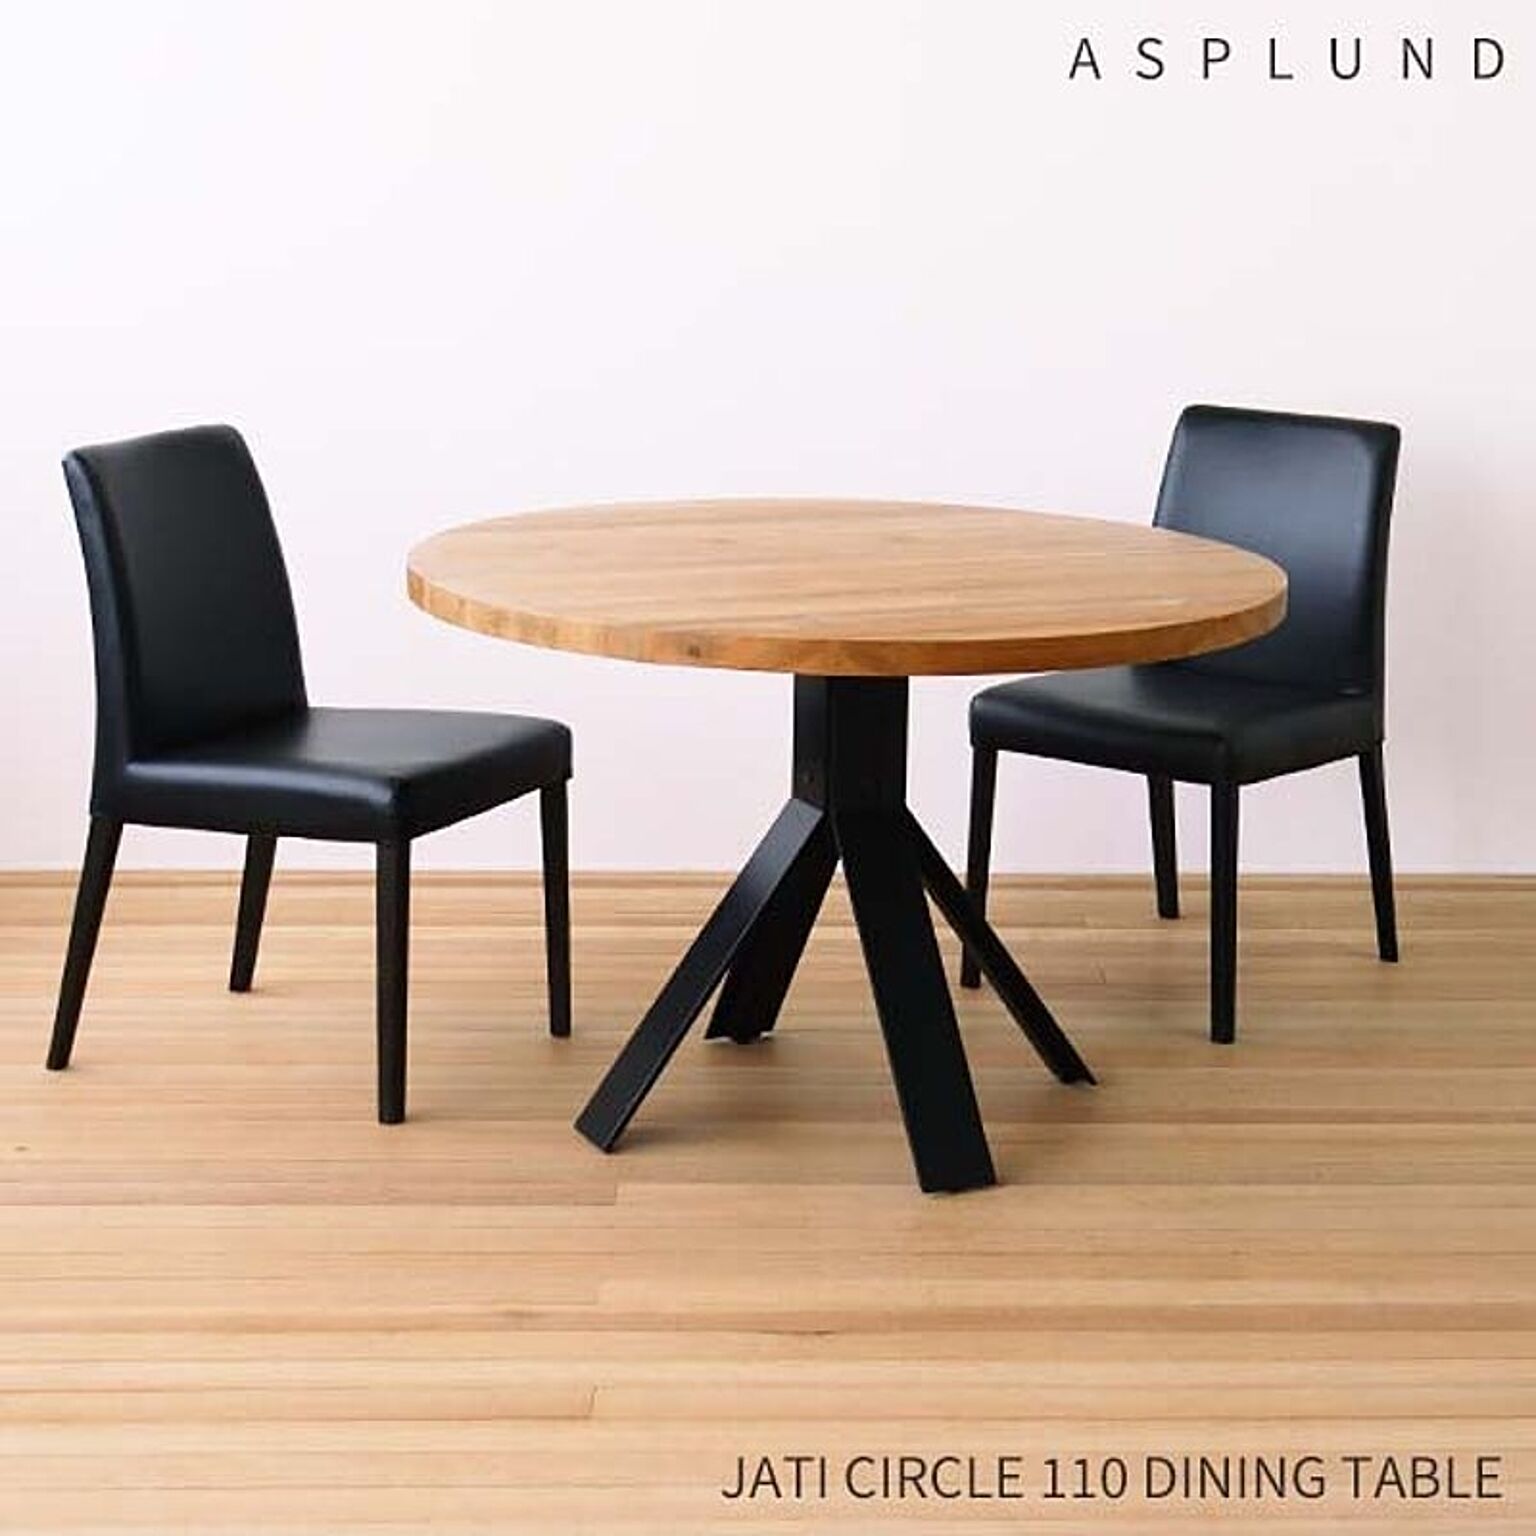 ASPLUND ダイニングテーブル JATI CIRCLE 110 幅110 奥行110 高さ72 チーク材 円形